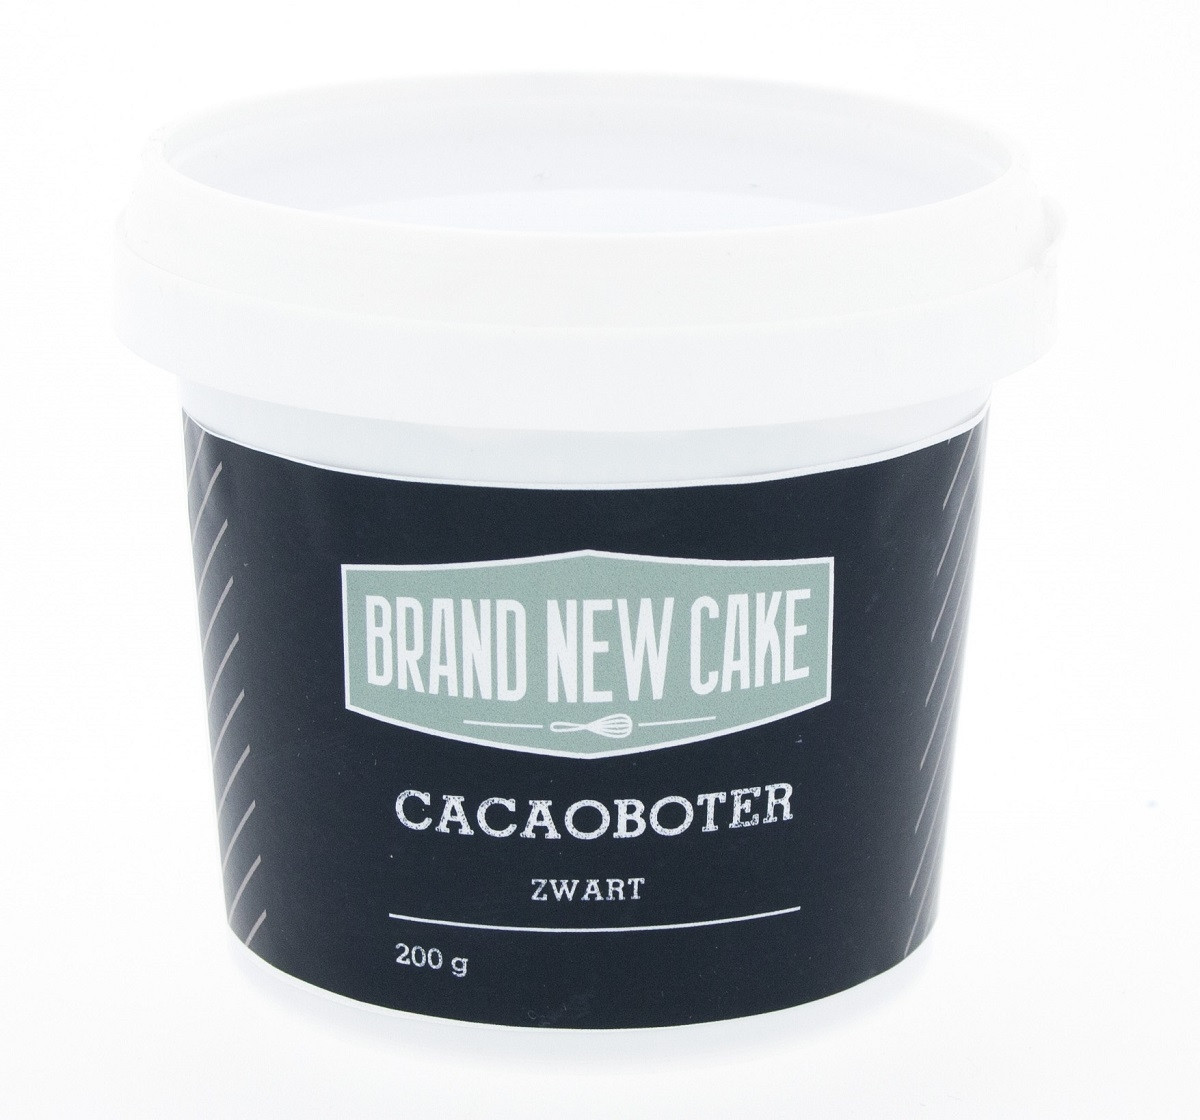 BrandNewCake Cacaoboter gekleurd Zwart 200g